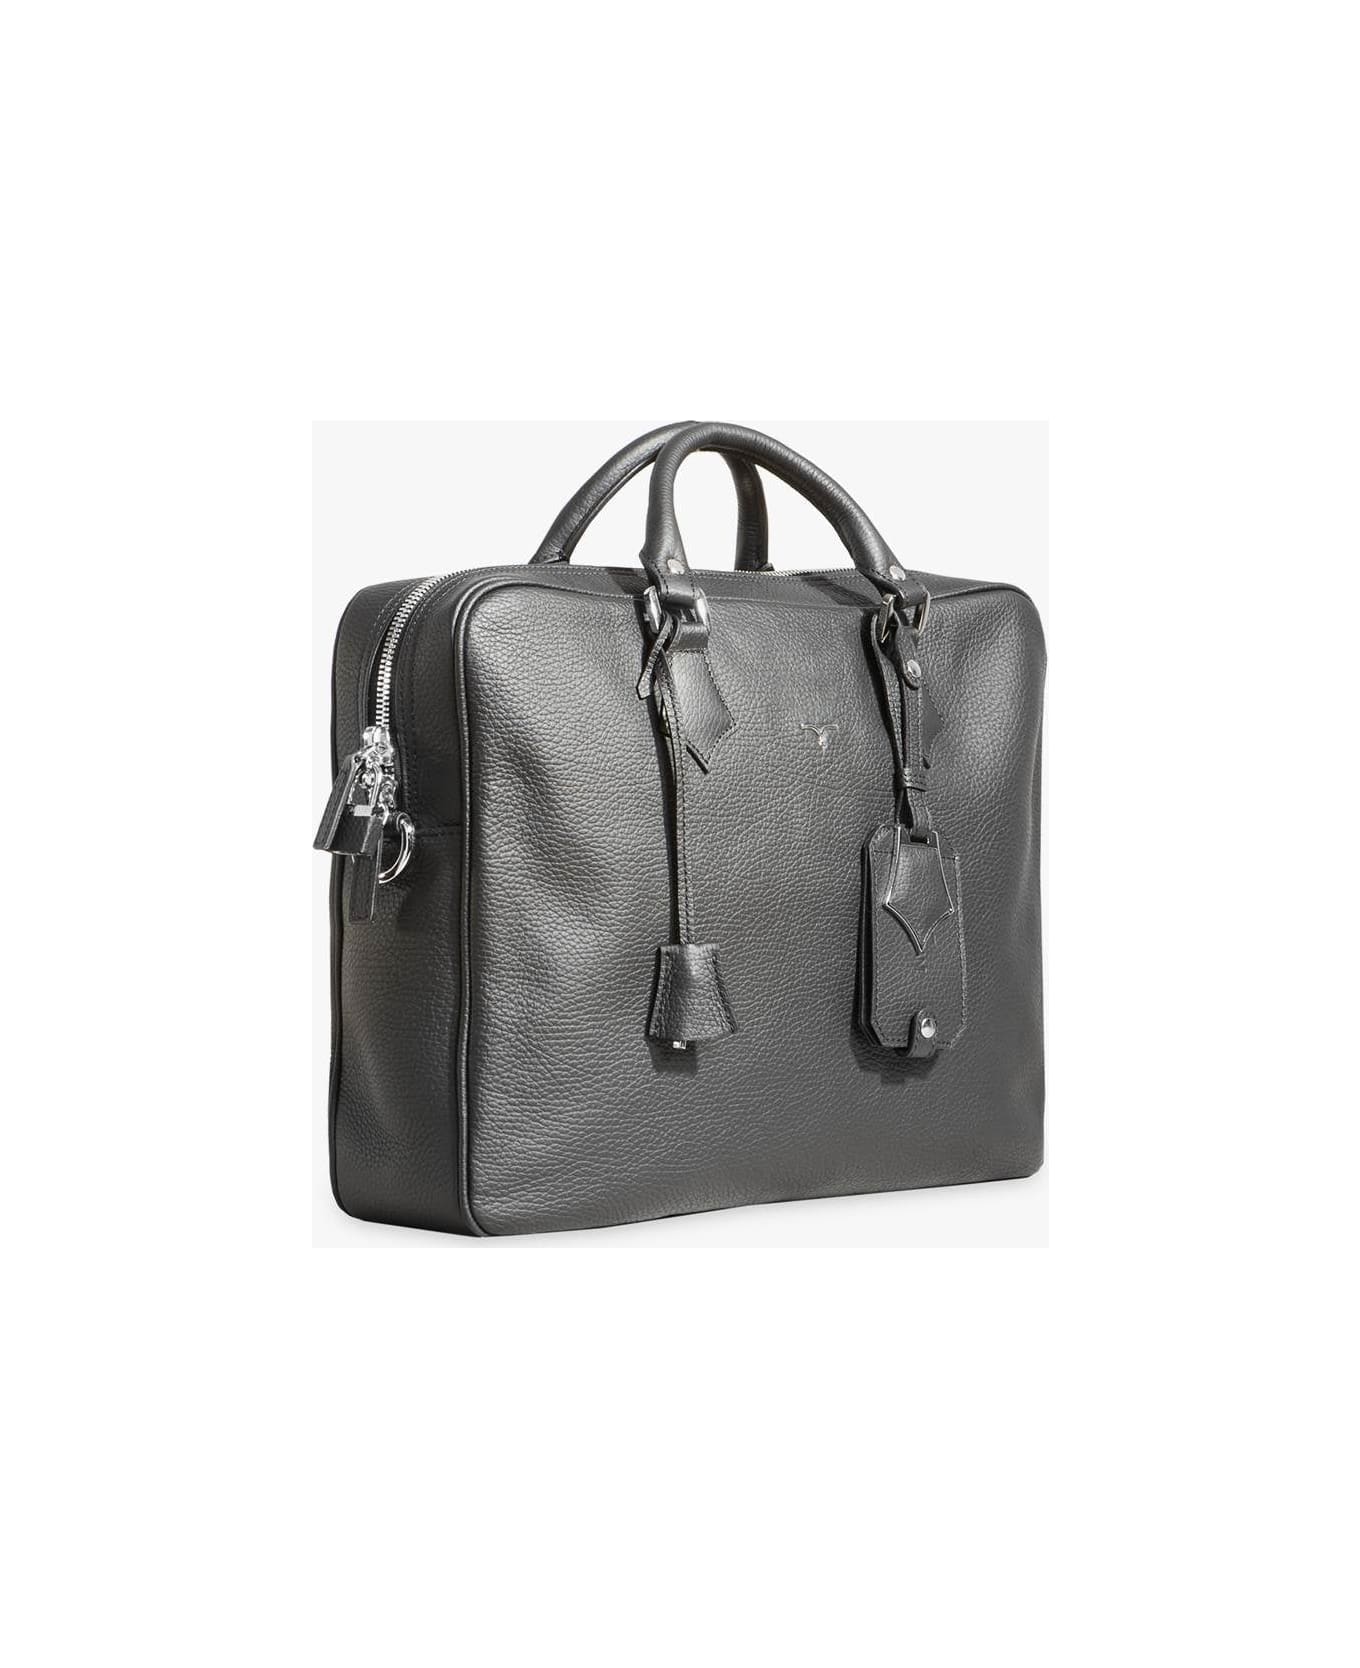 Larusmiani Briefcase 'piazza Affari' Luggage - Black トラベルバッグ